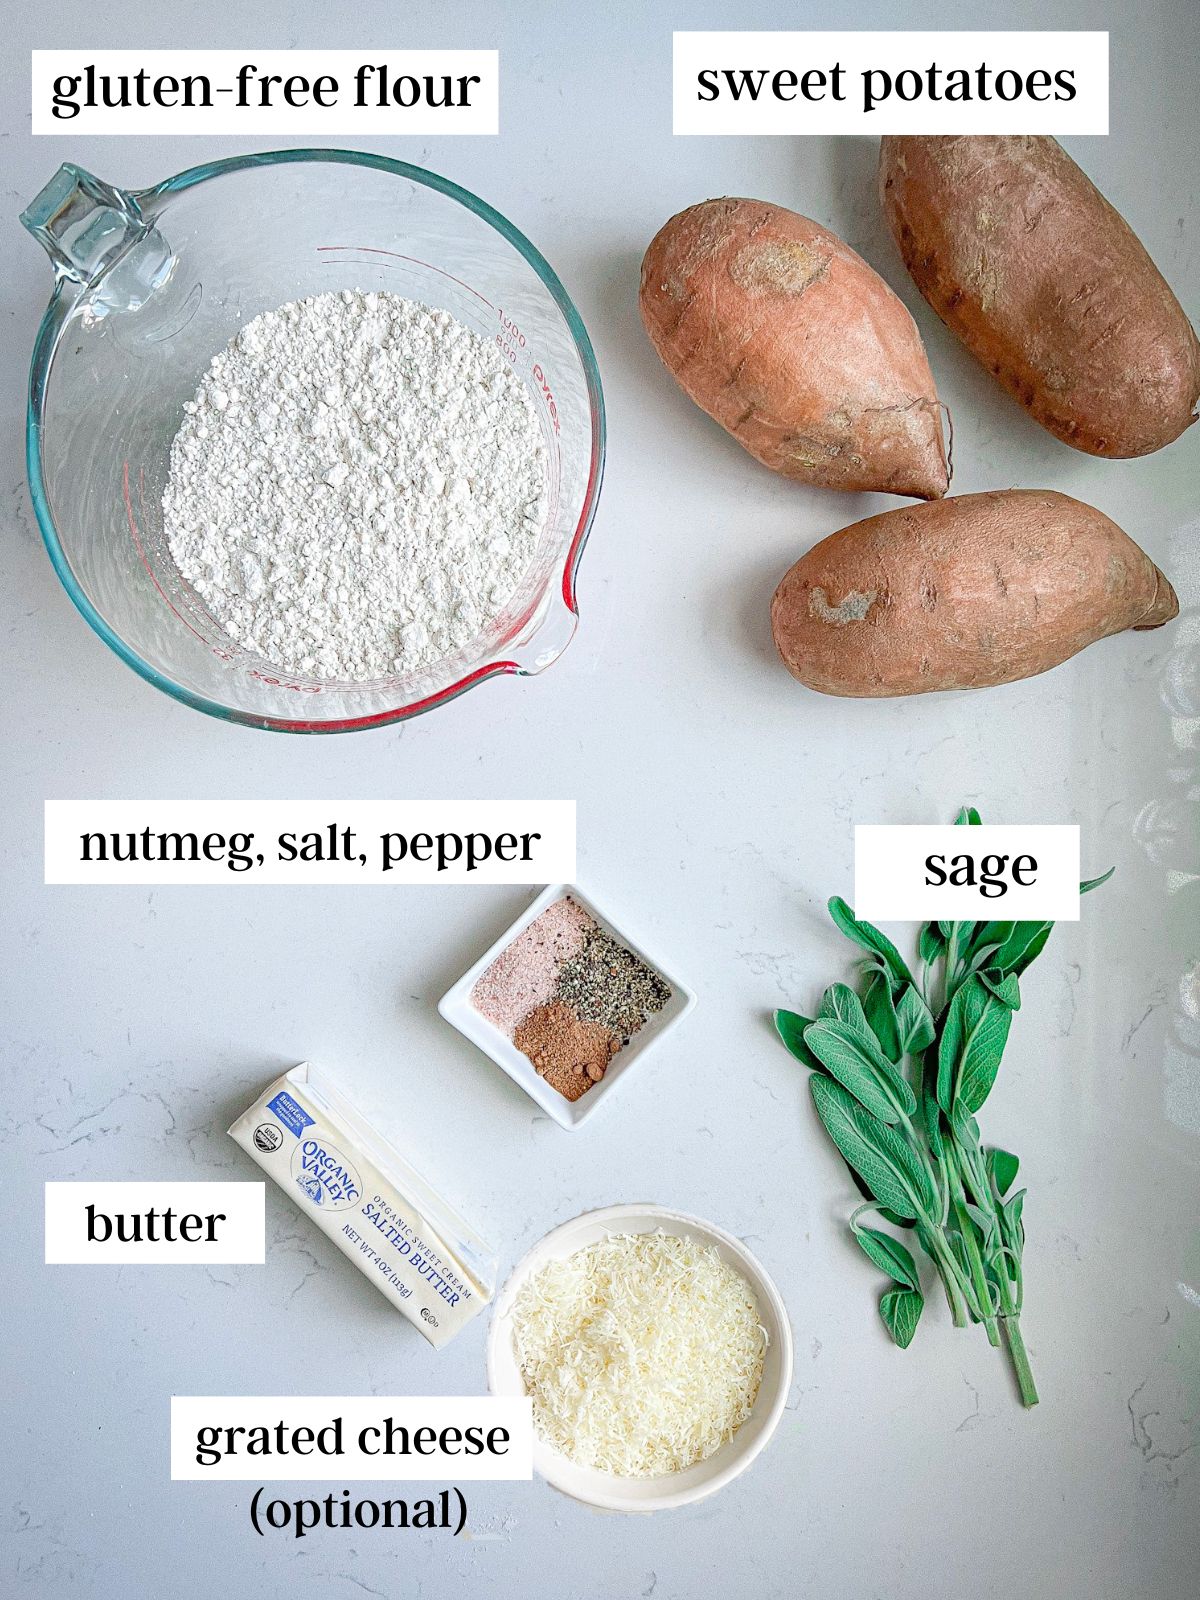 ingredients for gluten-free sweet potato gnocchi